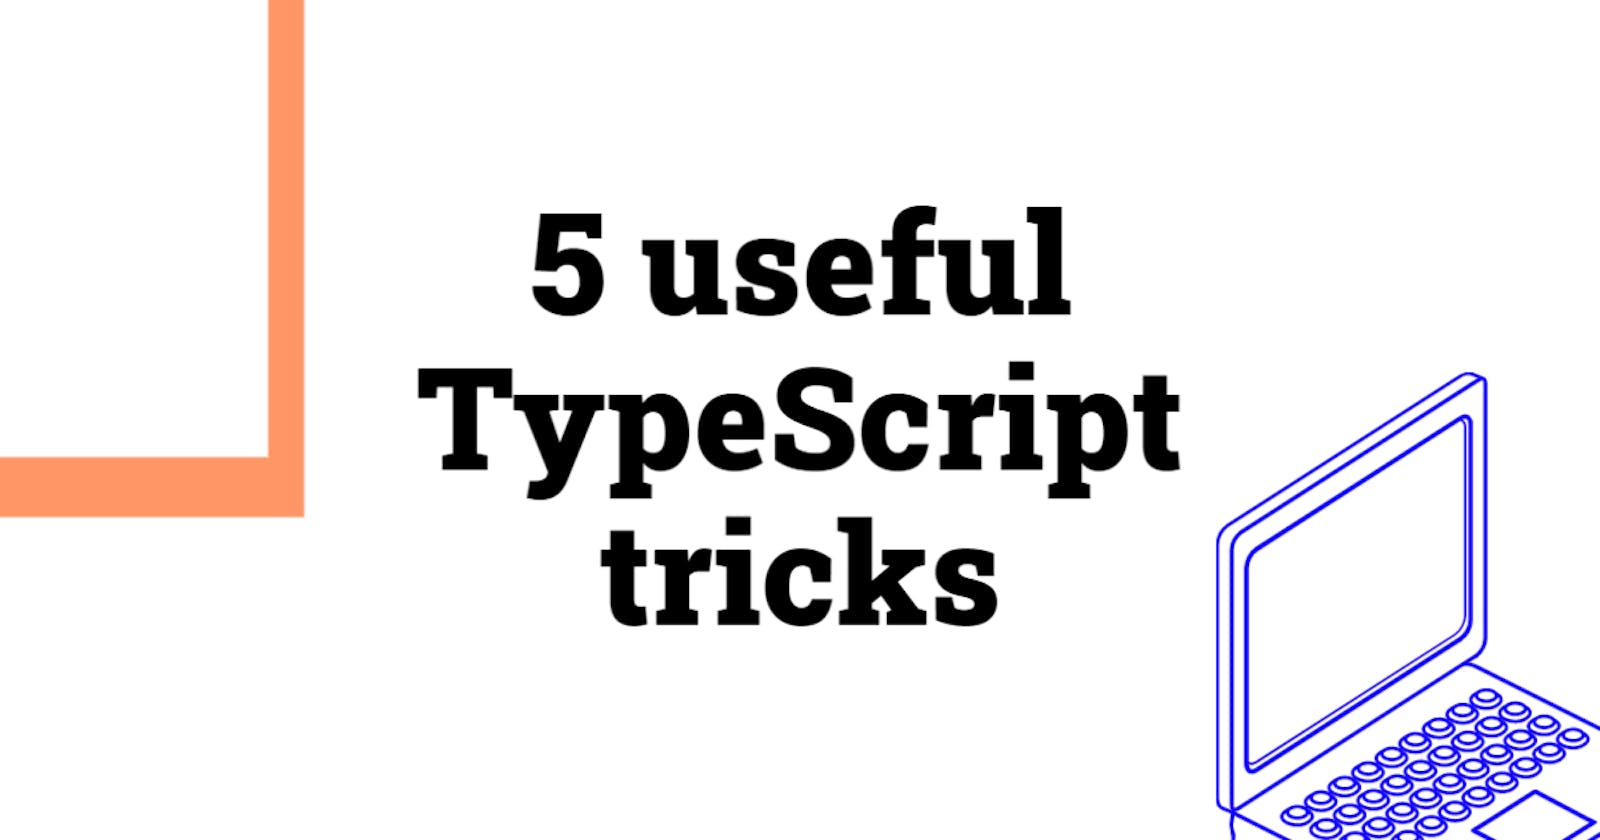 5 useful TypeScript tricks